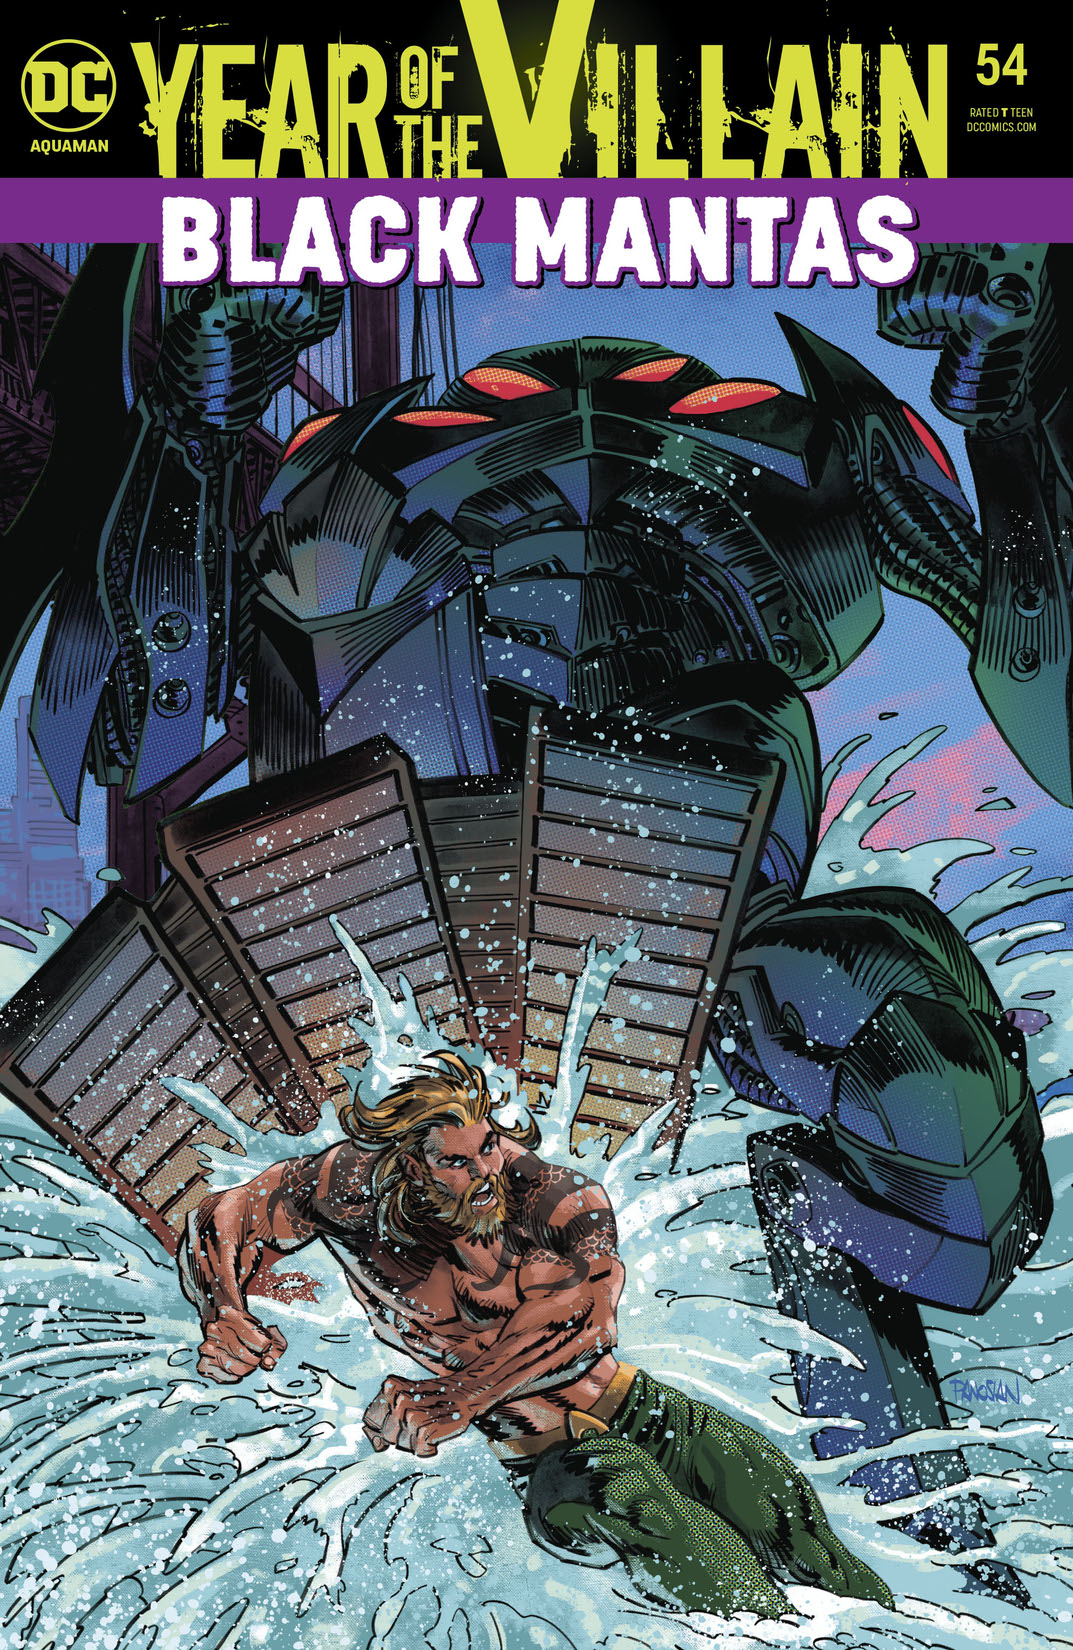 Aquaman (2016-) #54 preview images